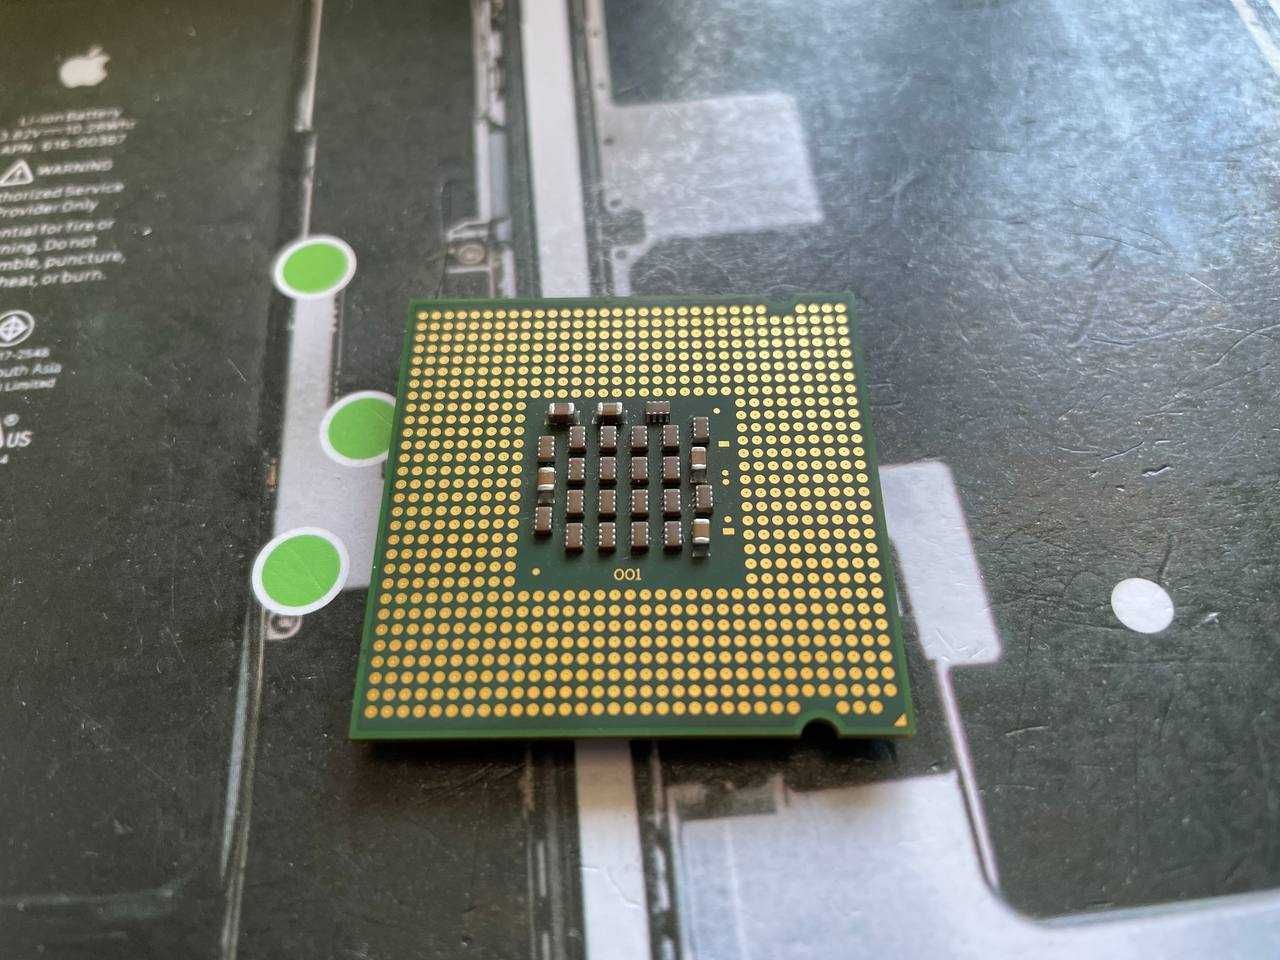 Intel Pentium 4 1M Cache, 3.00 GHz, 800 MHz FSB
PLGA775